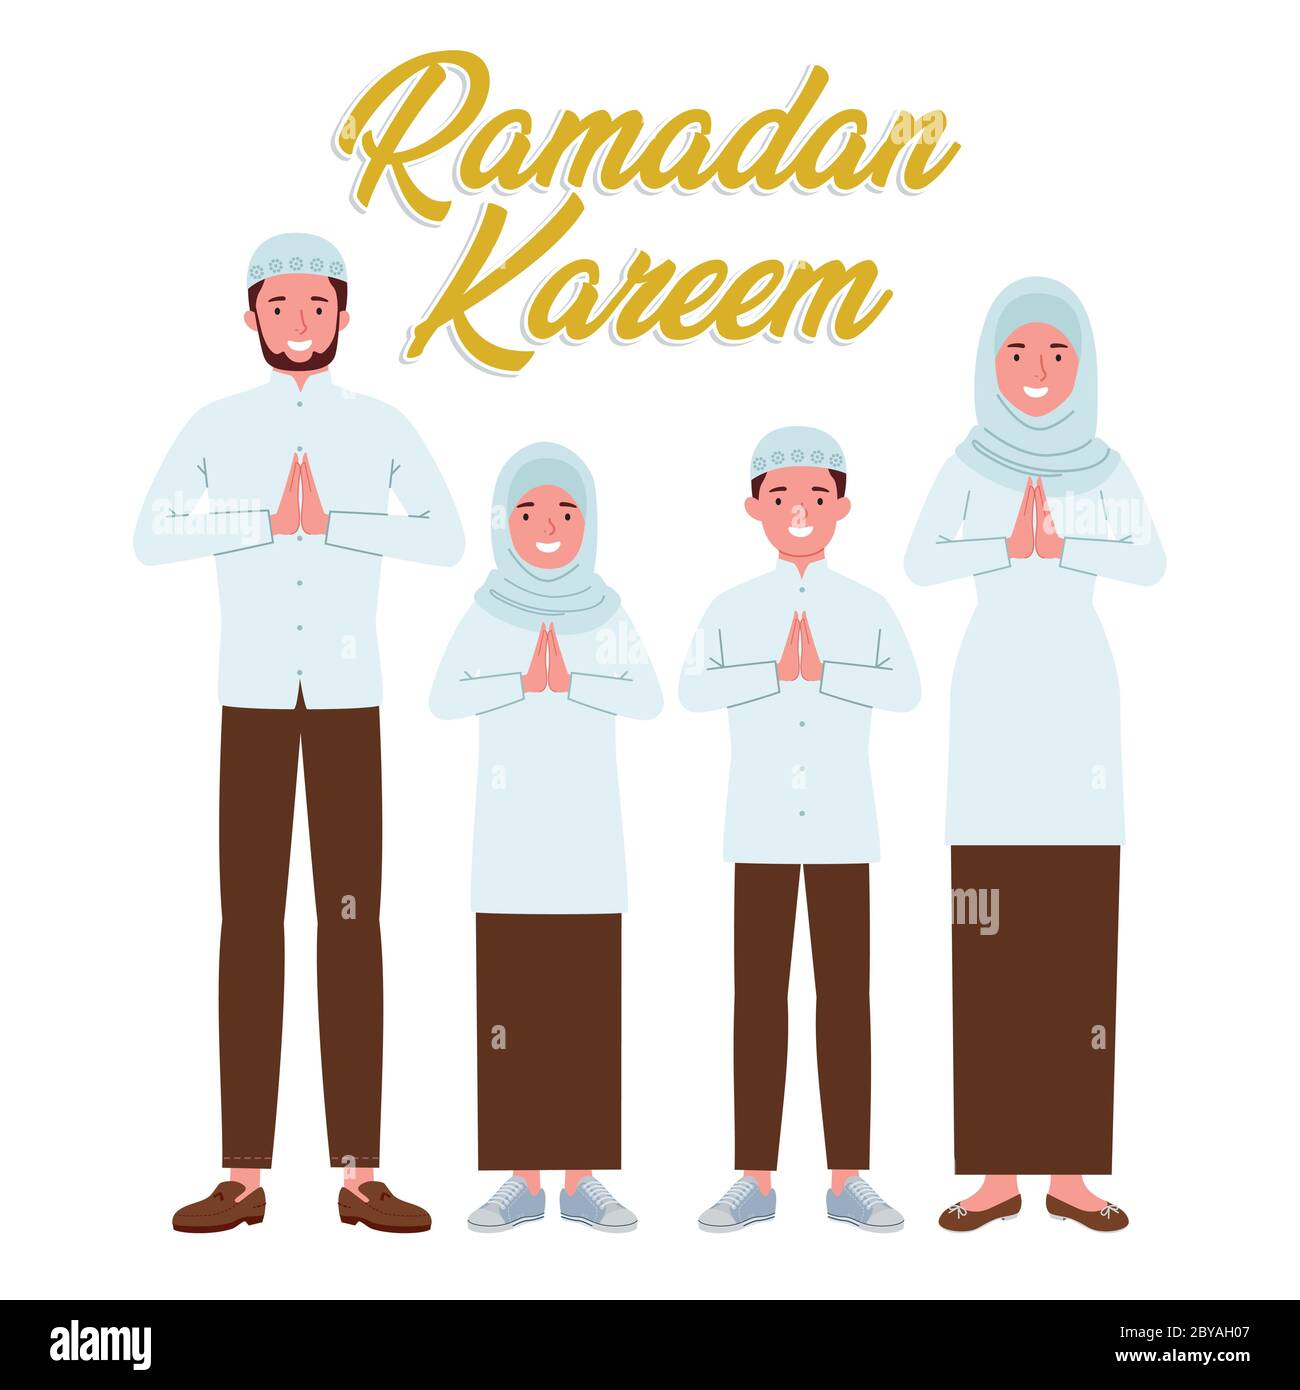 illustration of a Muslim family wearing a white shirt saying Ramadan Kareem. Stock Vector